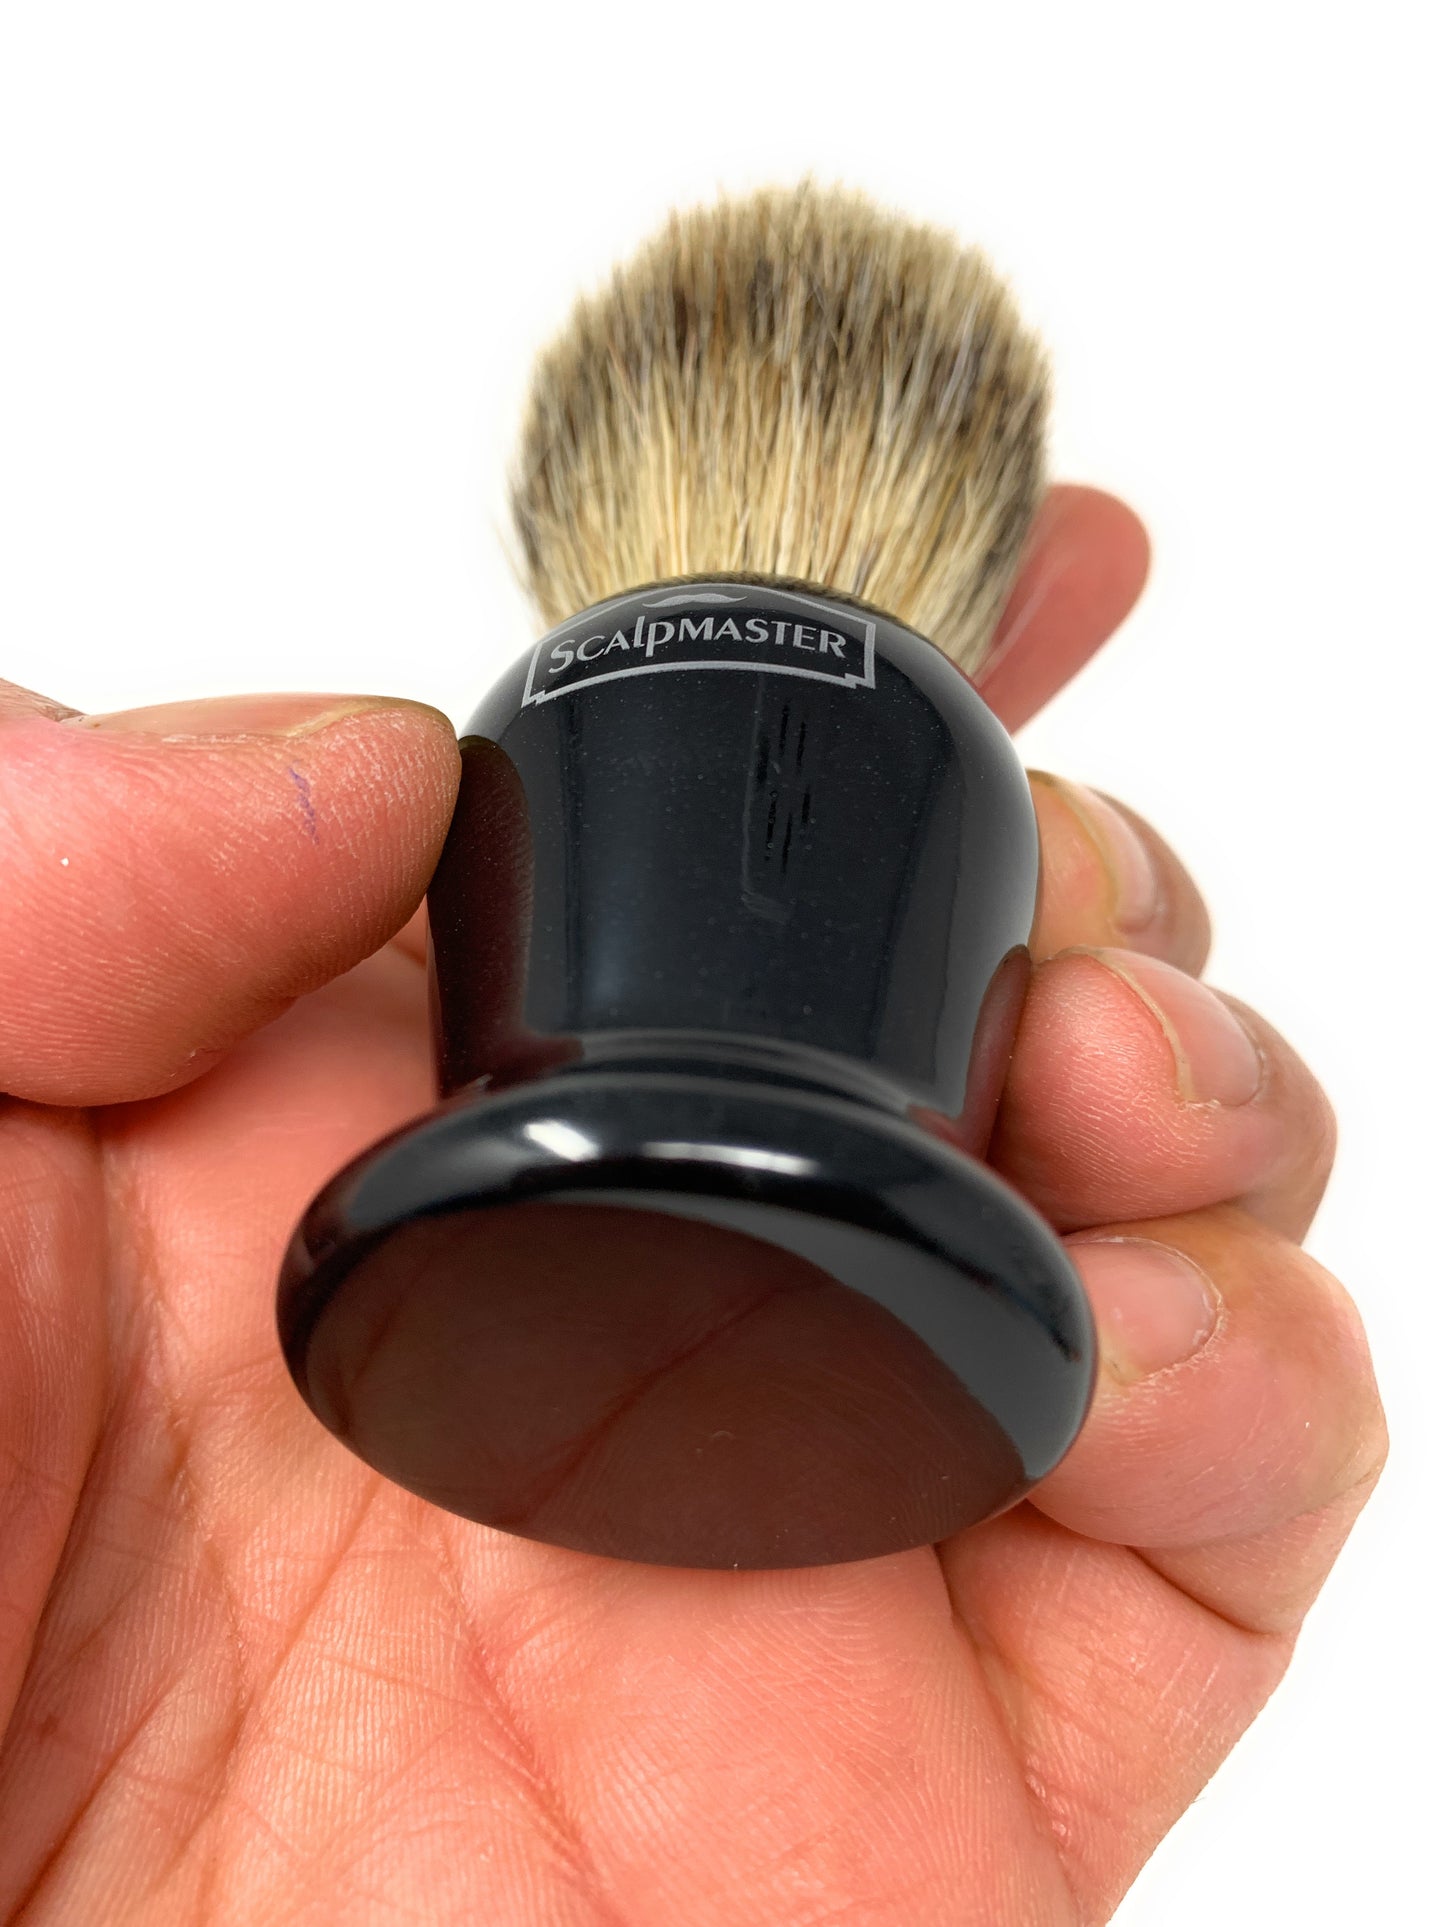 Scalpmaster Boar/Badger Mix Shaving Brush Shave Brush Black Handle SB-17